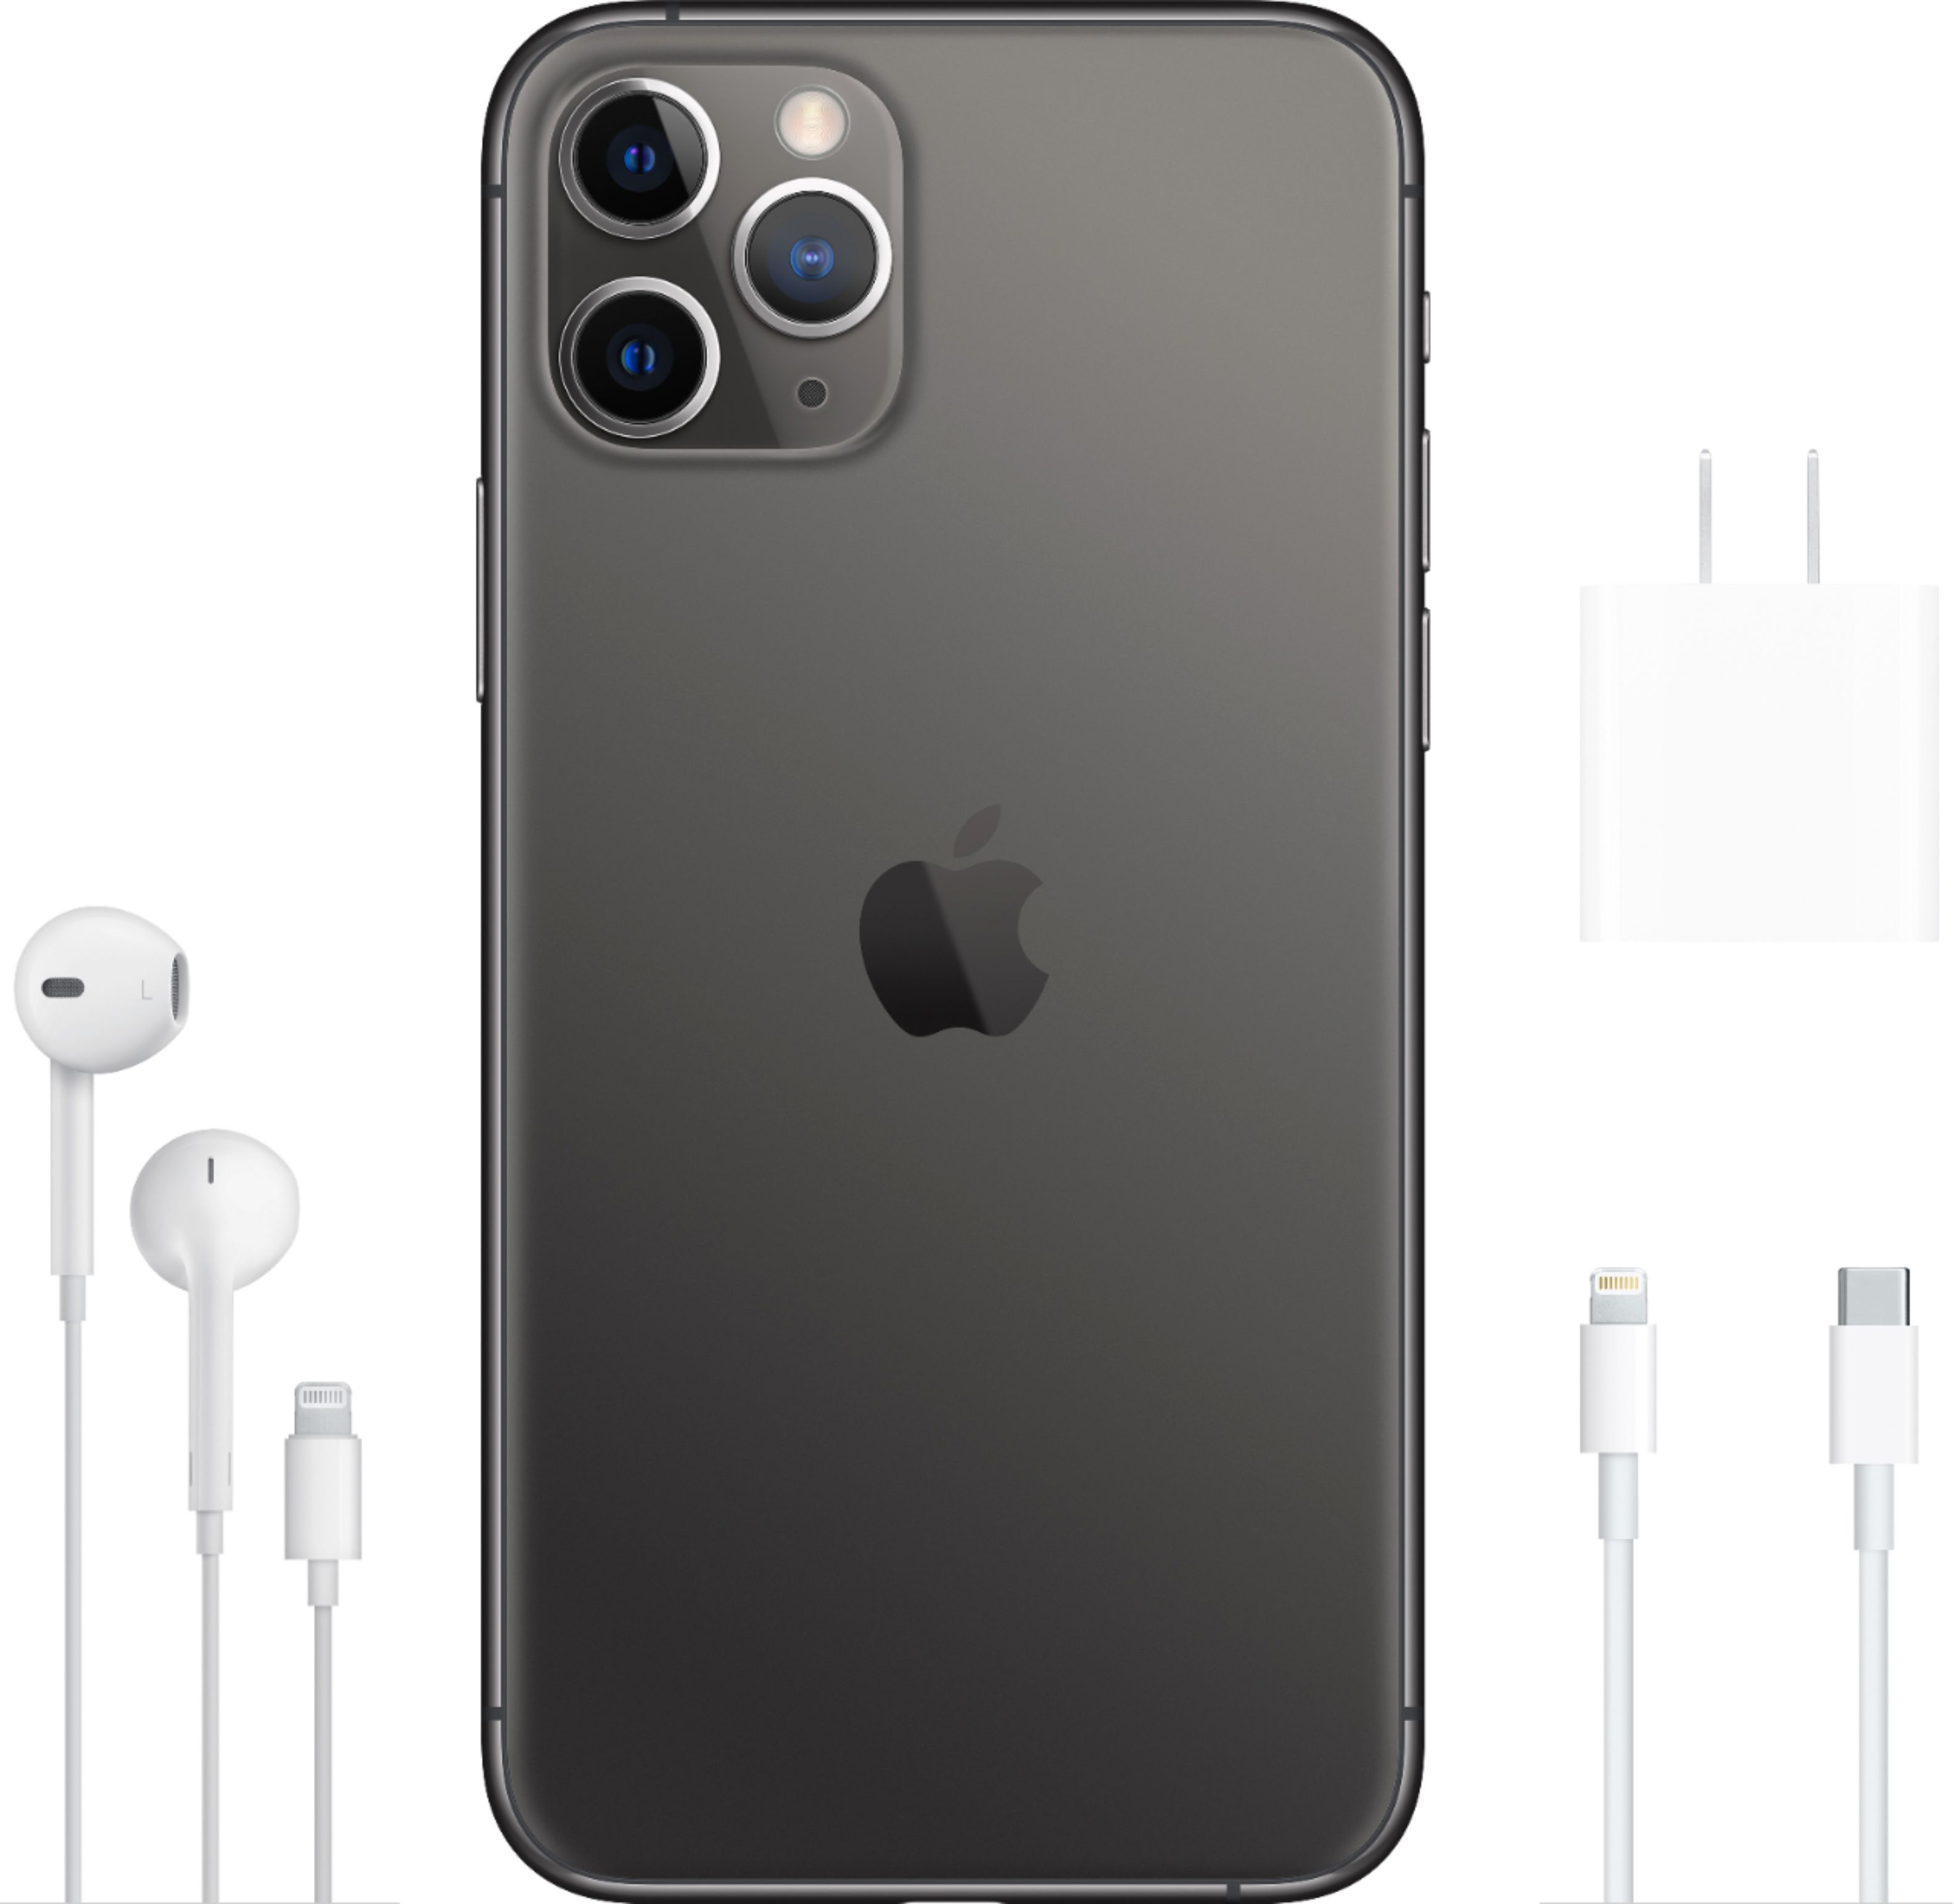 Apple iPhone 11 Pro 256GB Space Gray (Verizon) MWCM2LL/A - Best Buy